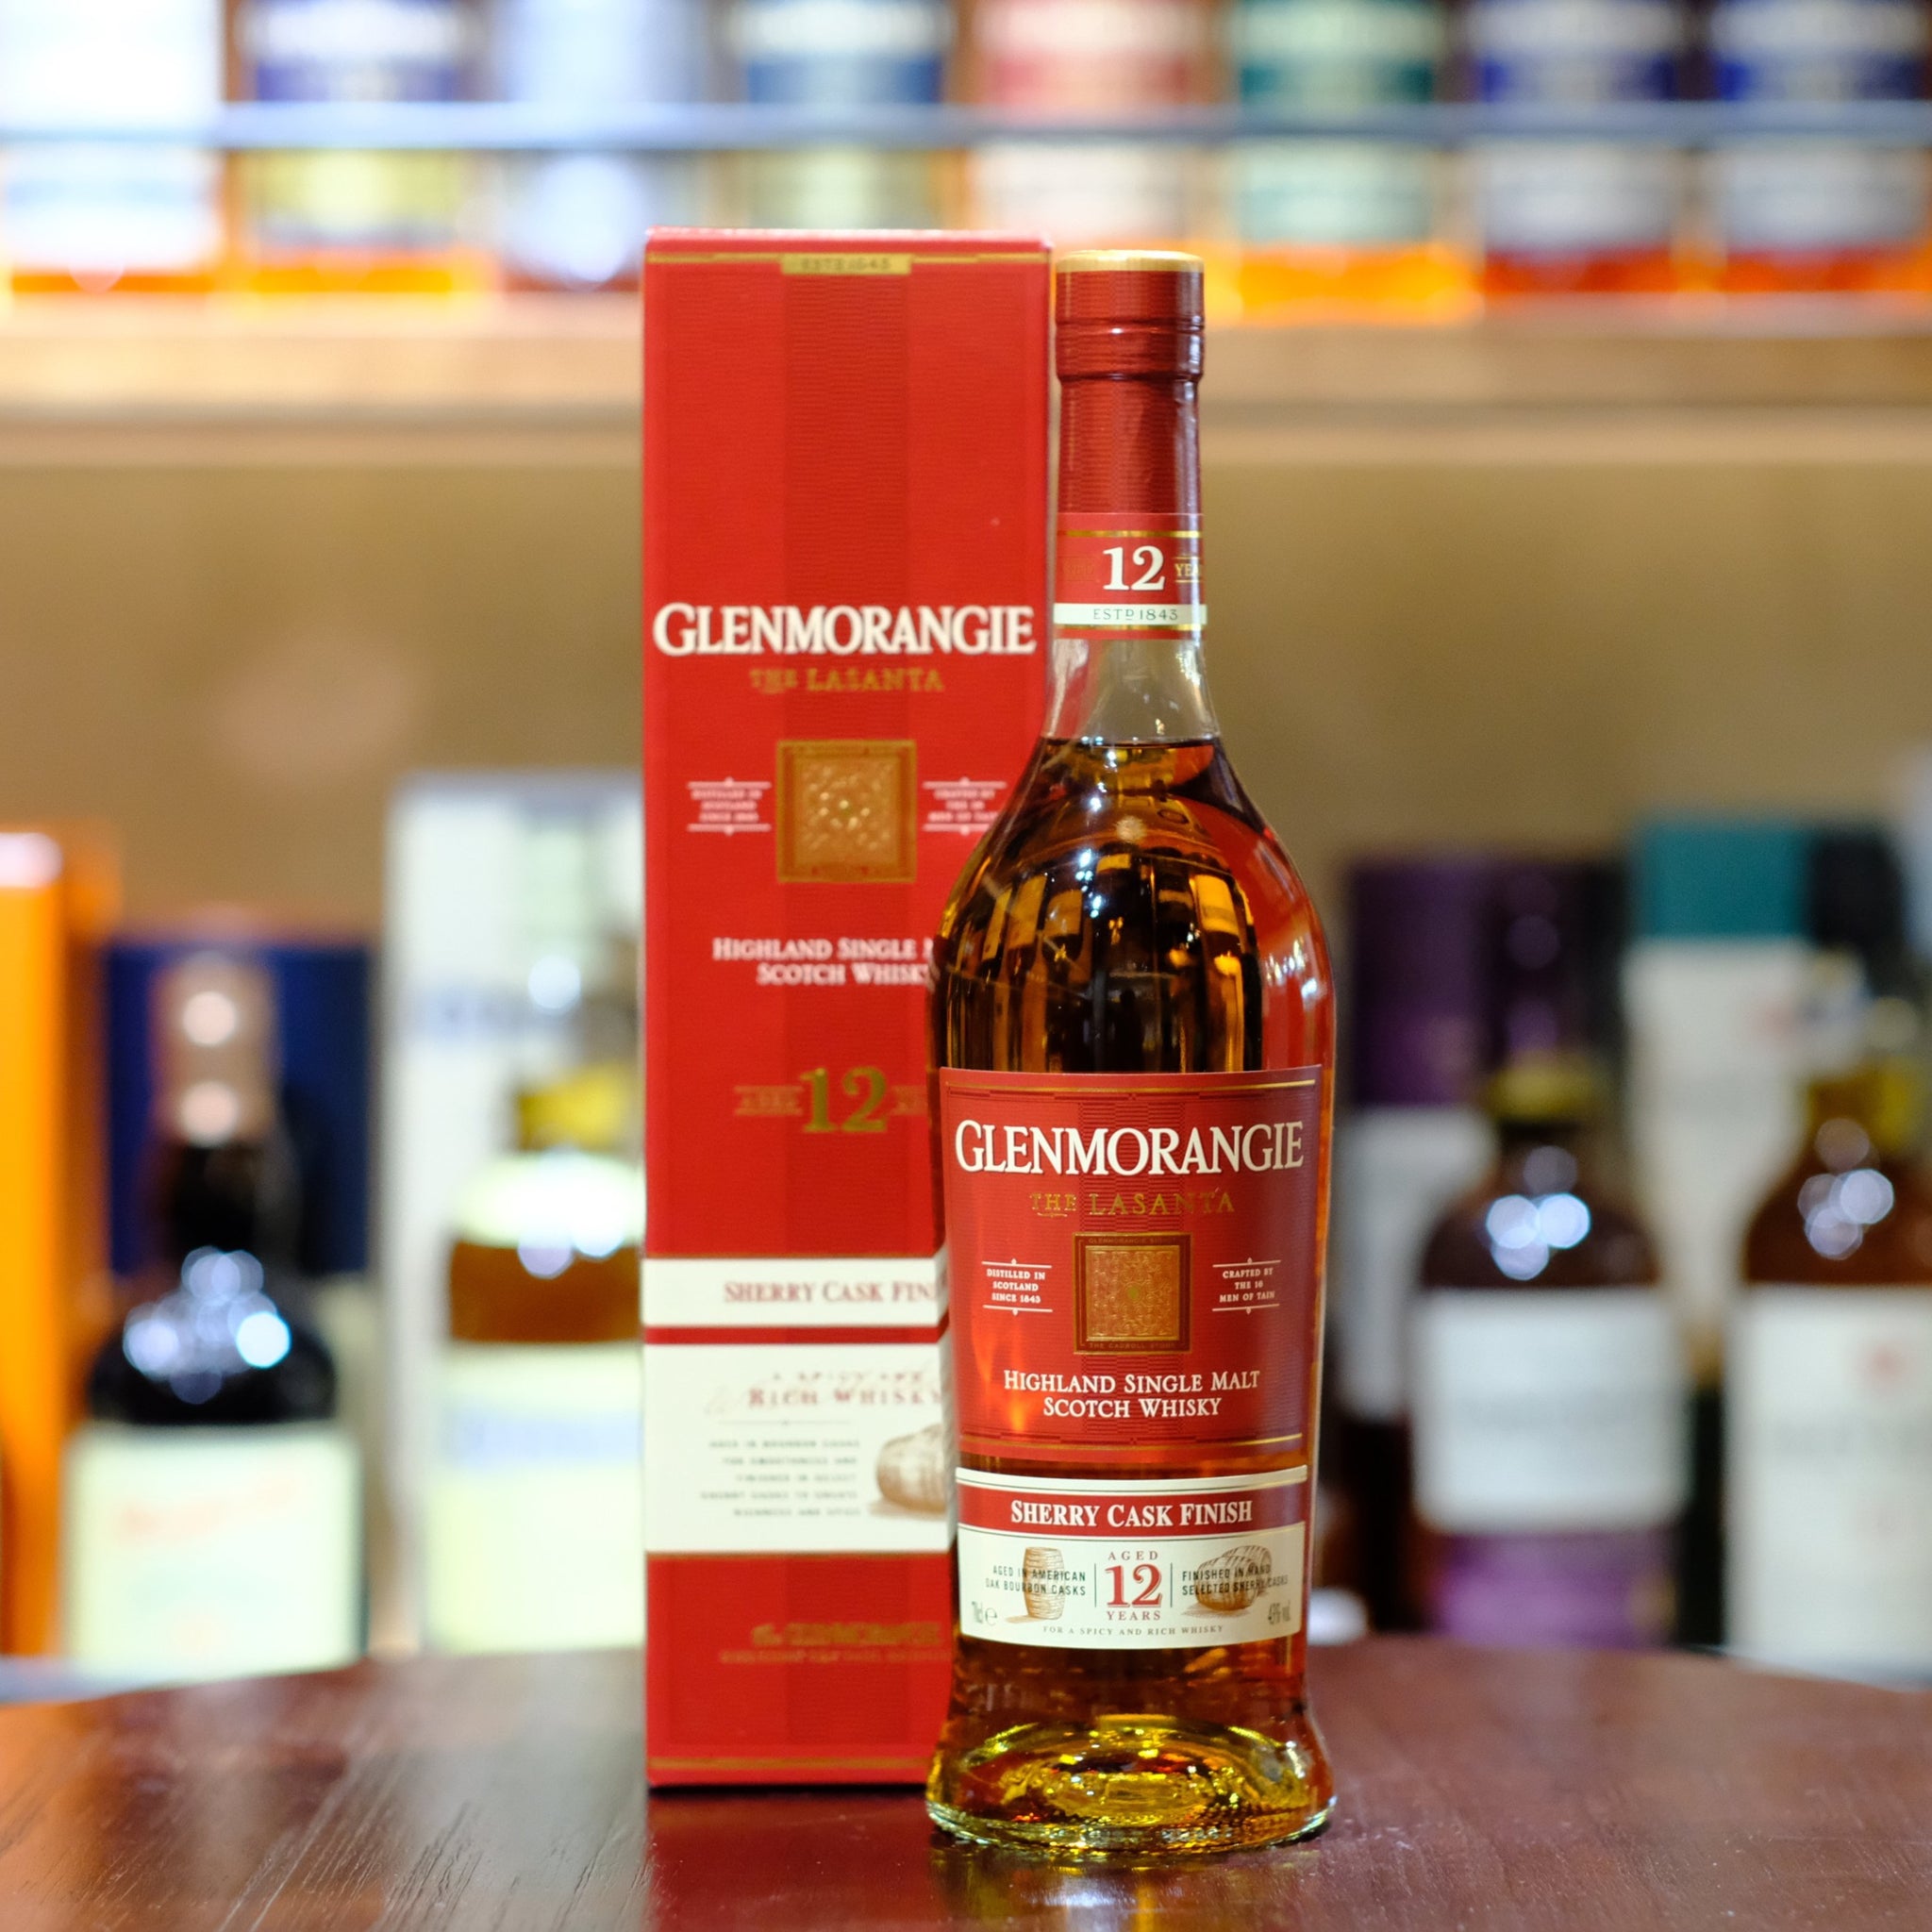 Glenmorangie 12 Year Old "Lasanta" Single Malt Scotch Whisky